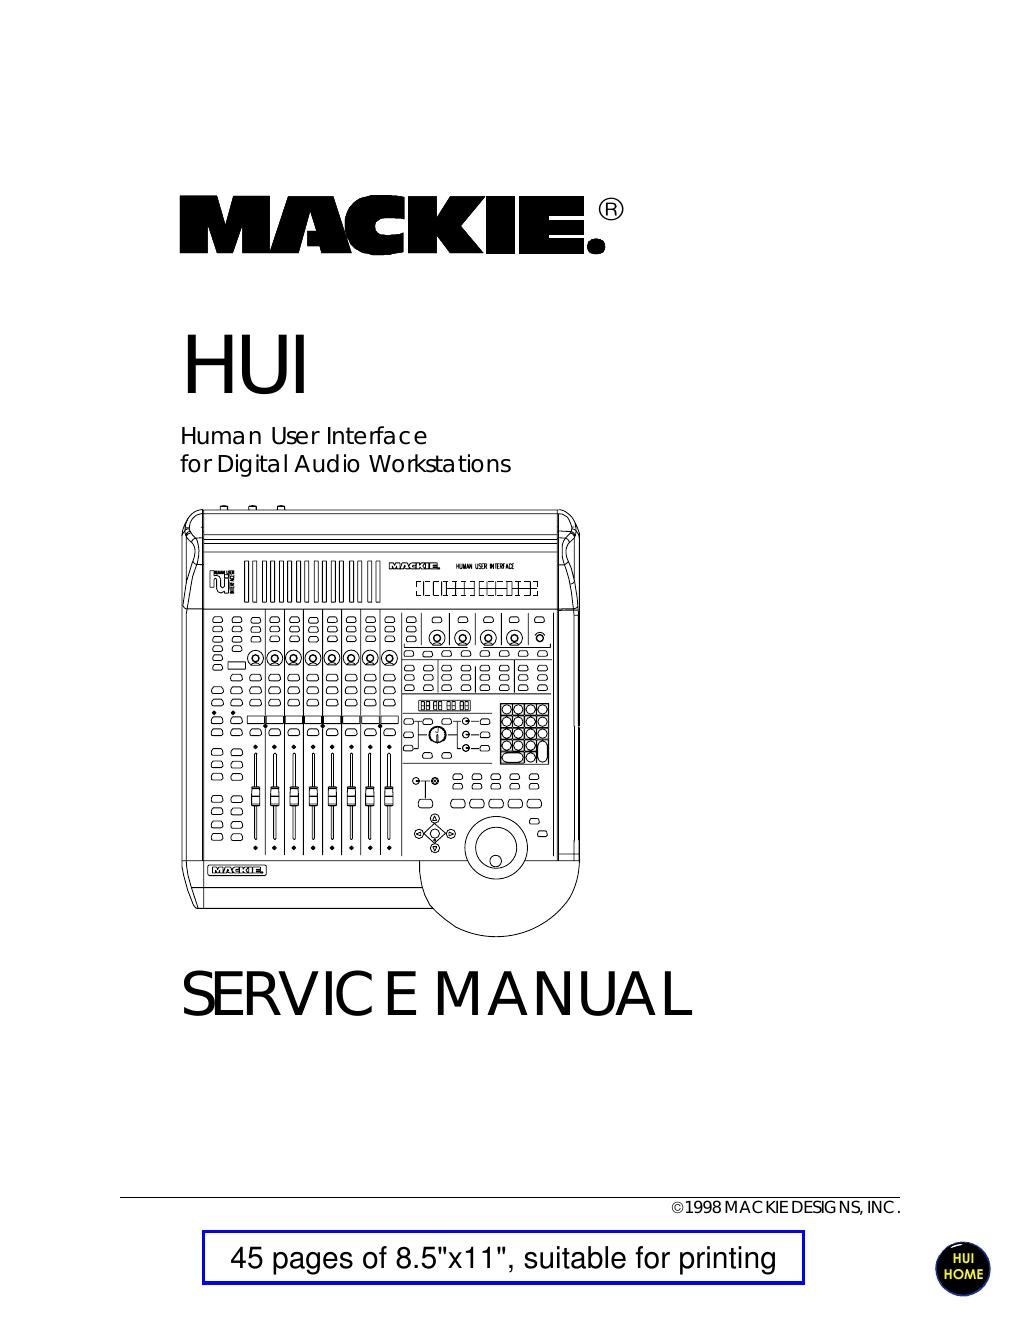 Mackie HUI Service Manual